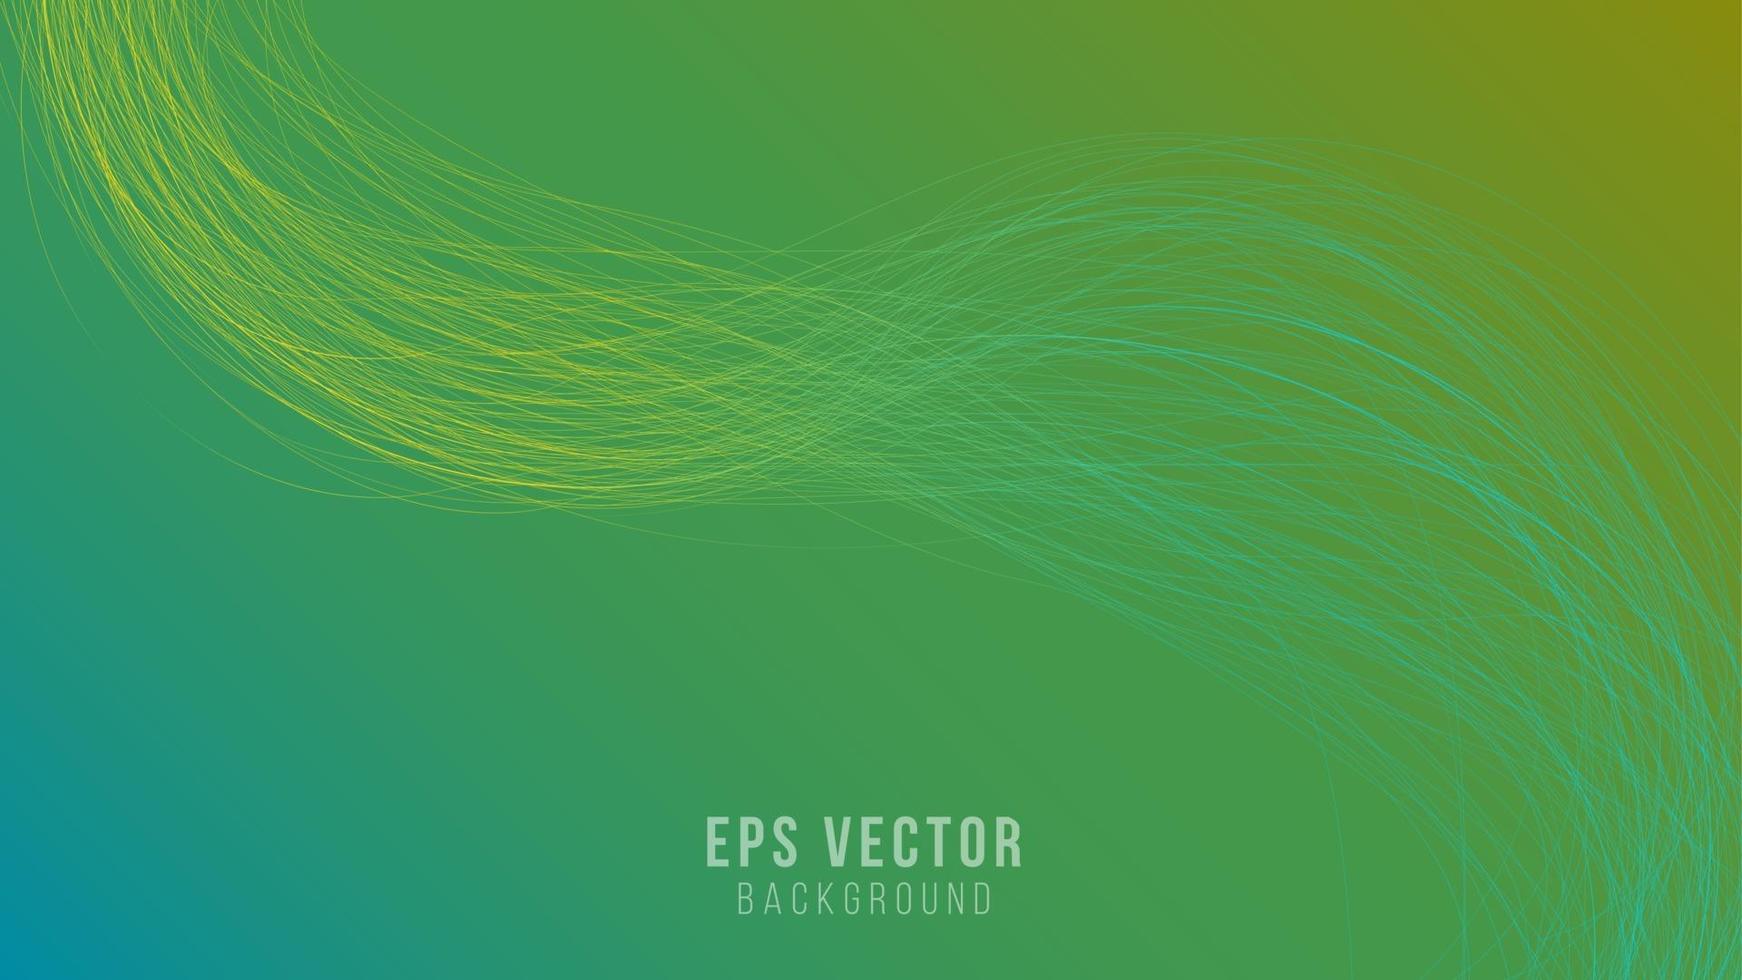 gradiente verde líneas onduladas fondo abstracto eps vector editable